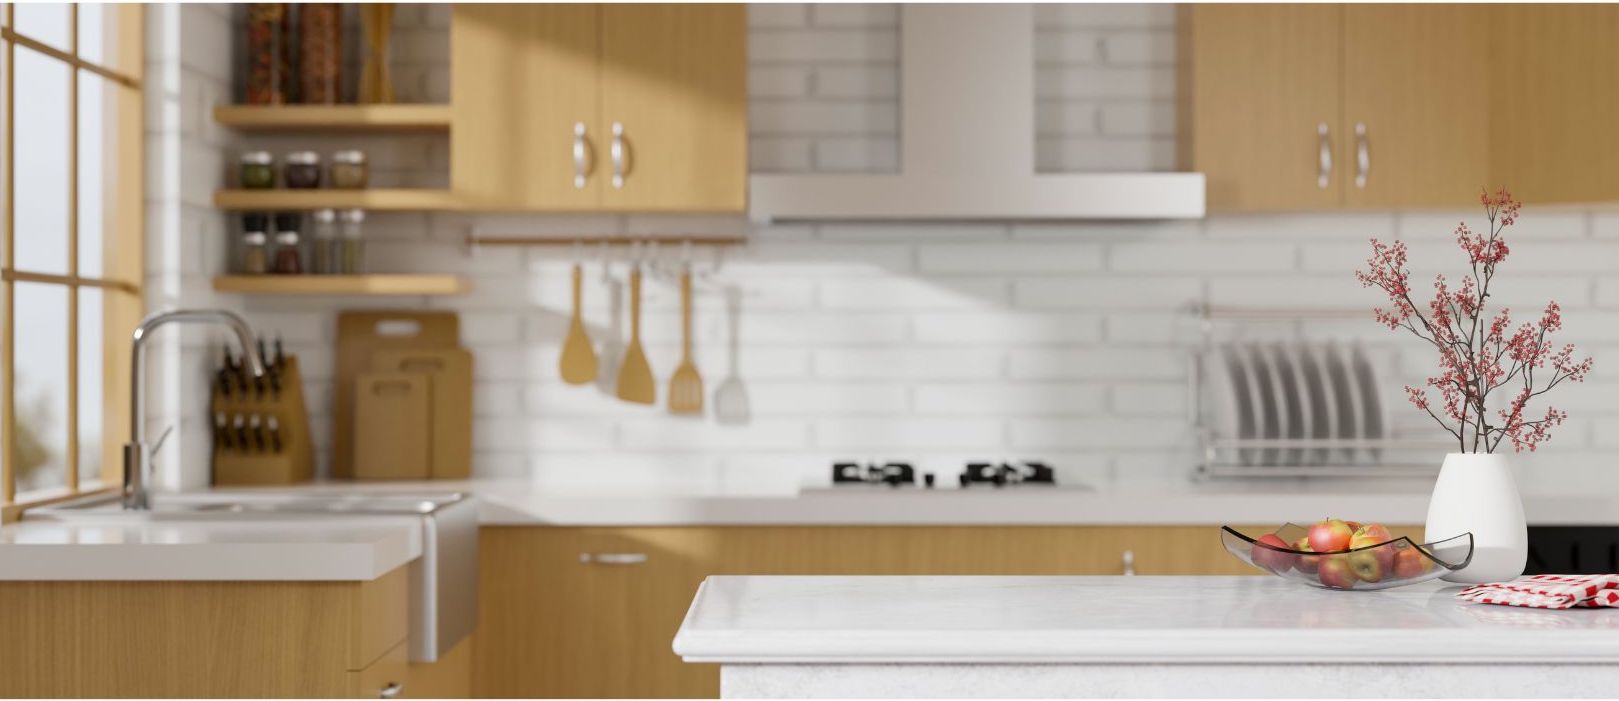 elegant kitchen color ideas with oak cabinets